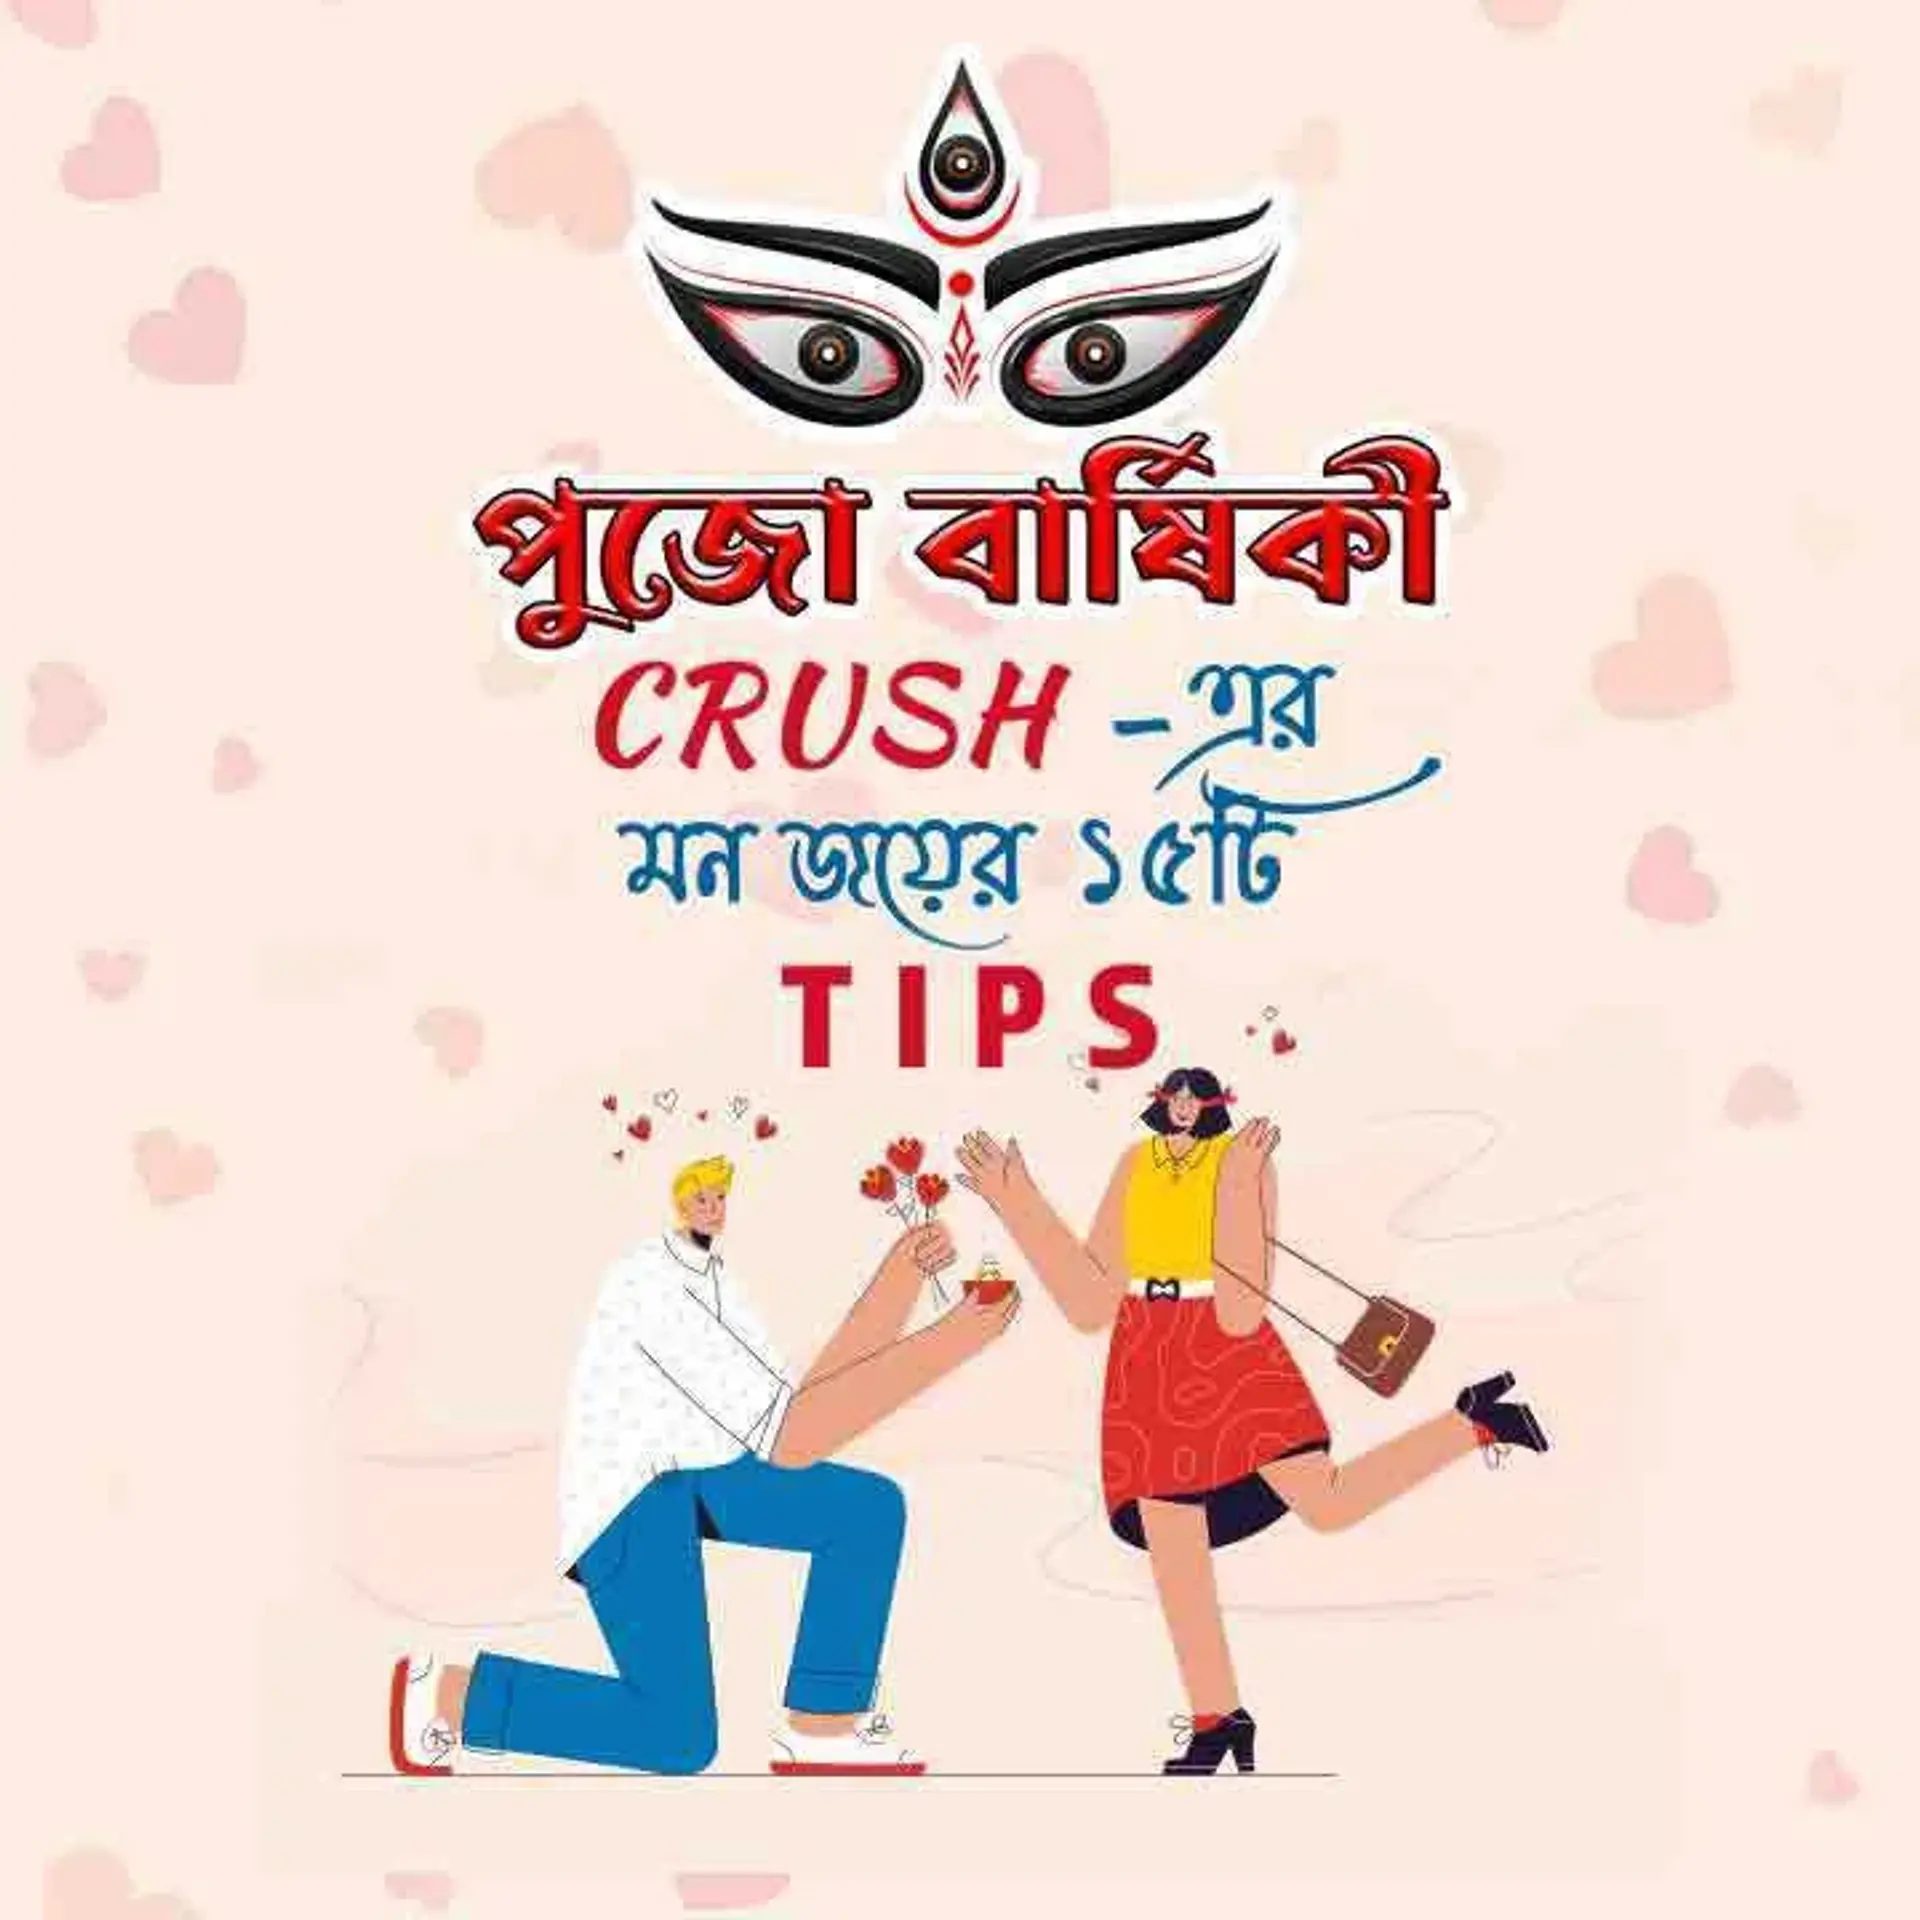 Pujo Barshiki: Crush-Er Mon Joyer 15ti Tips | 